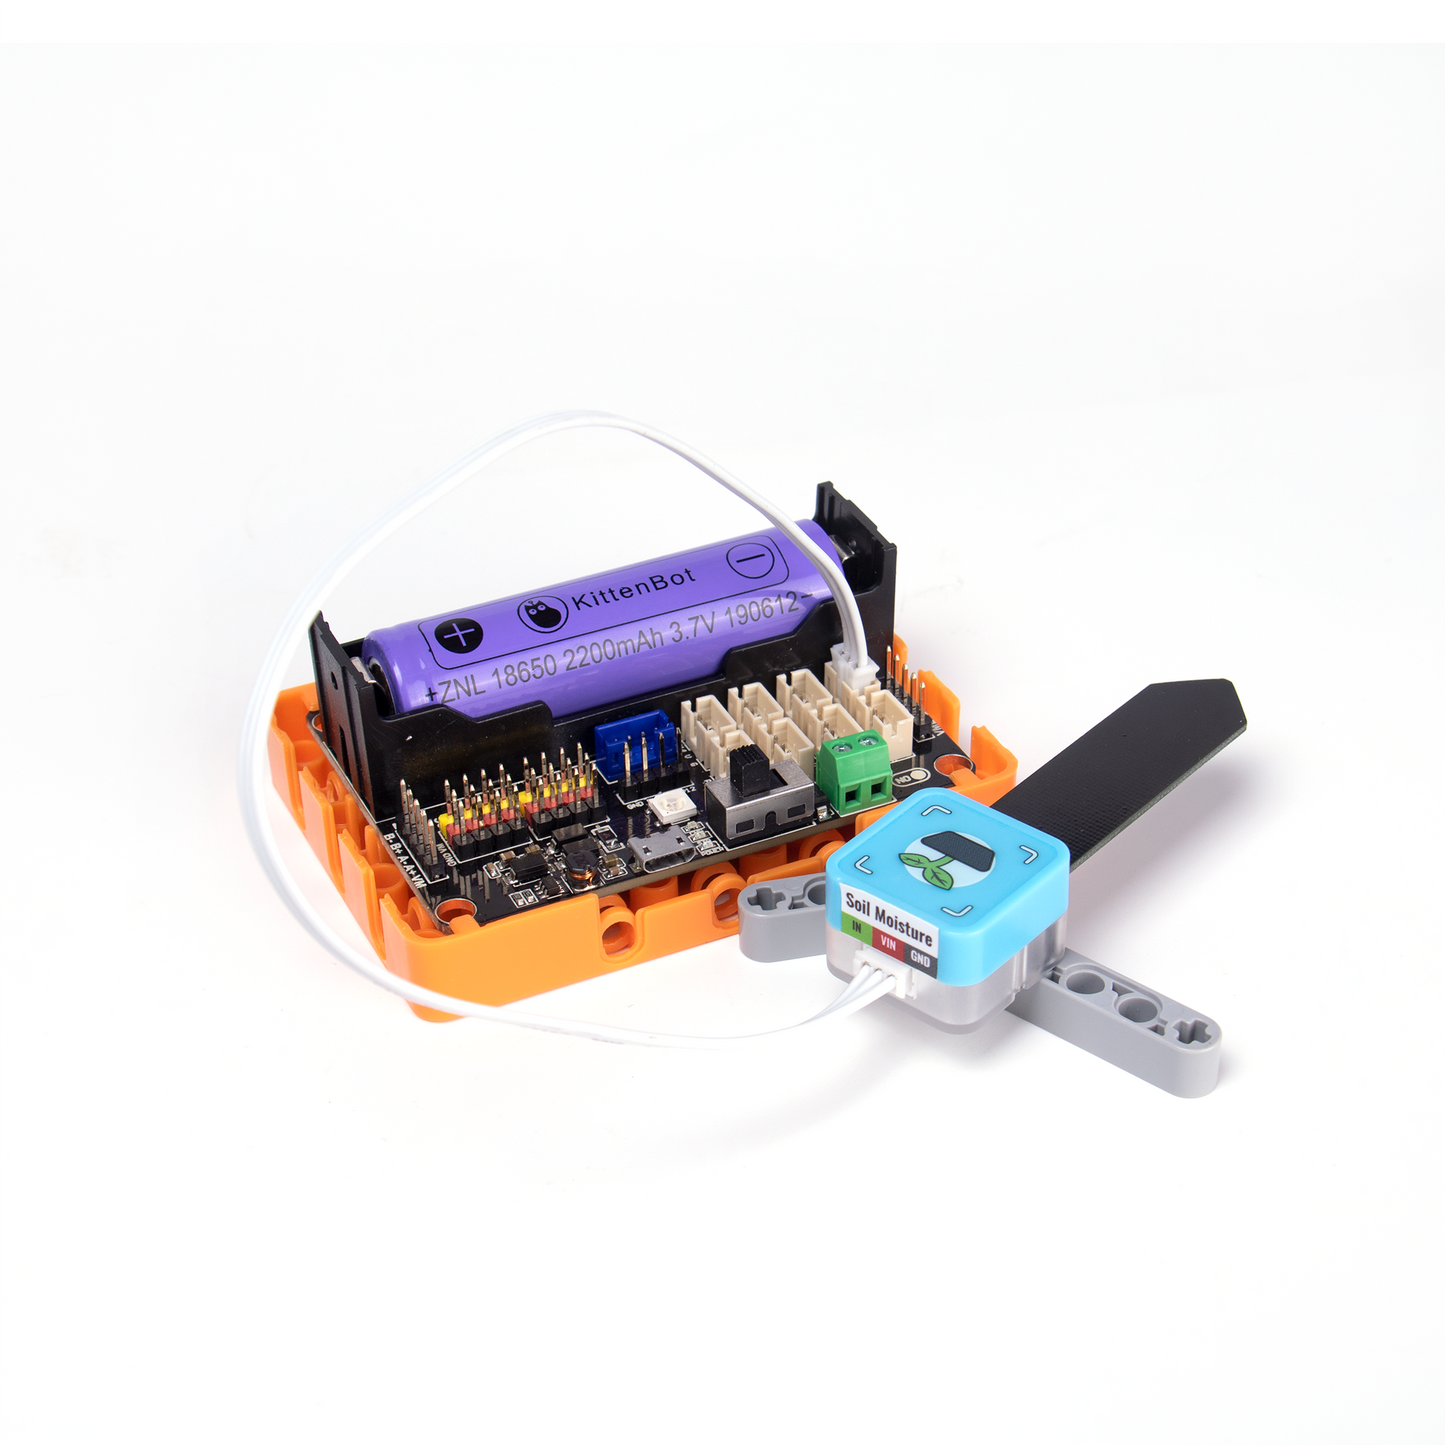 KittenBot Sugar Series Module for microbit Arduino projects - Soil Moisture Sensor